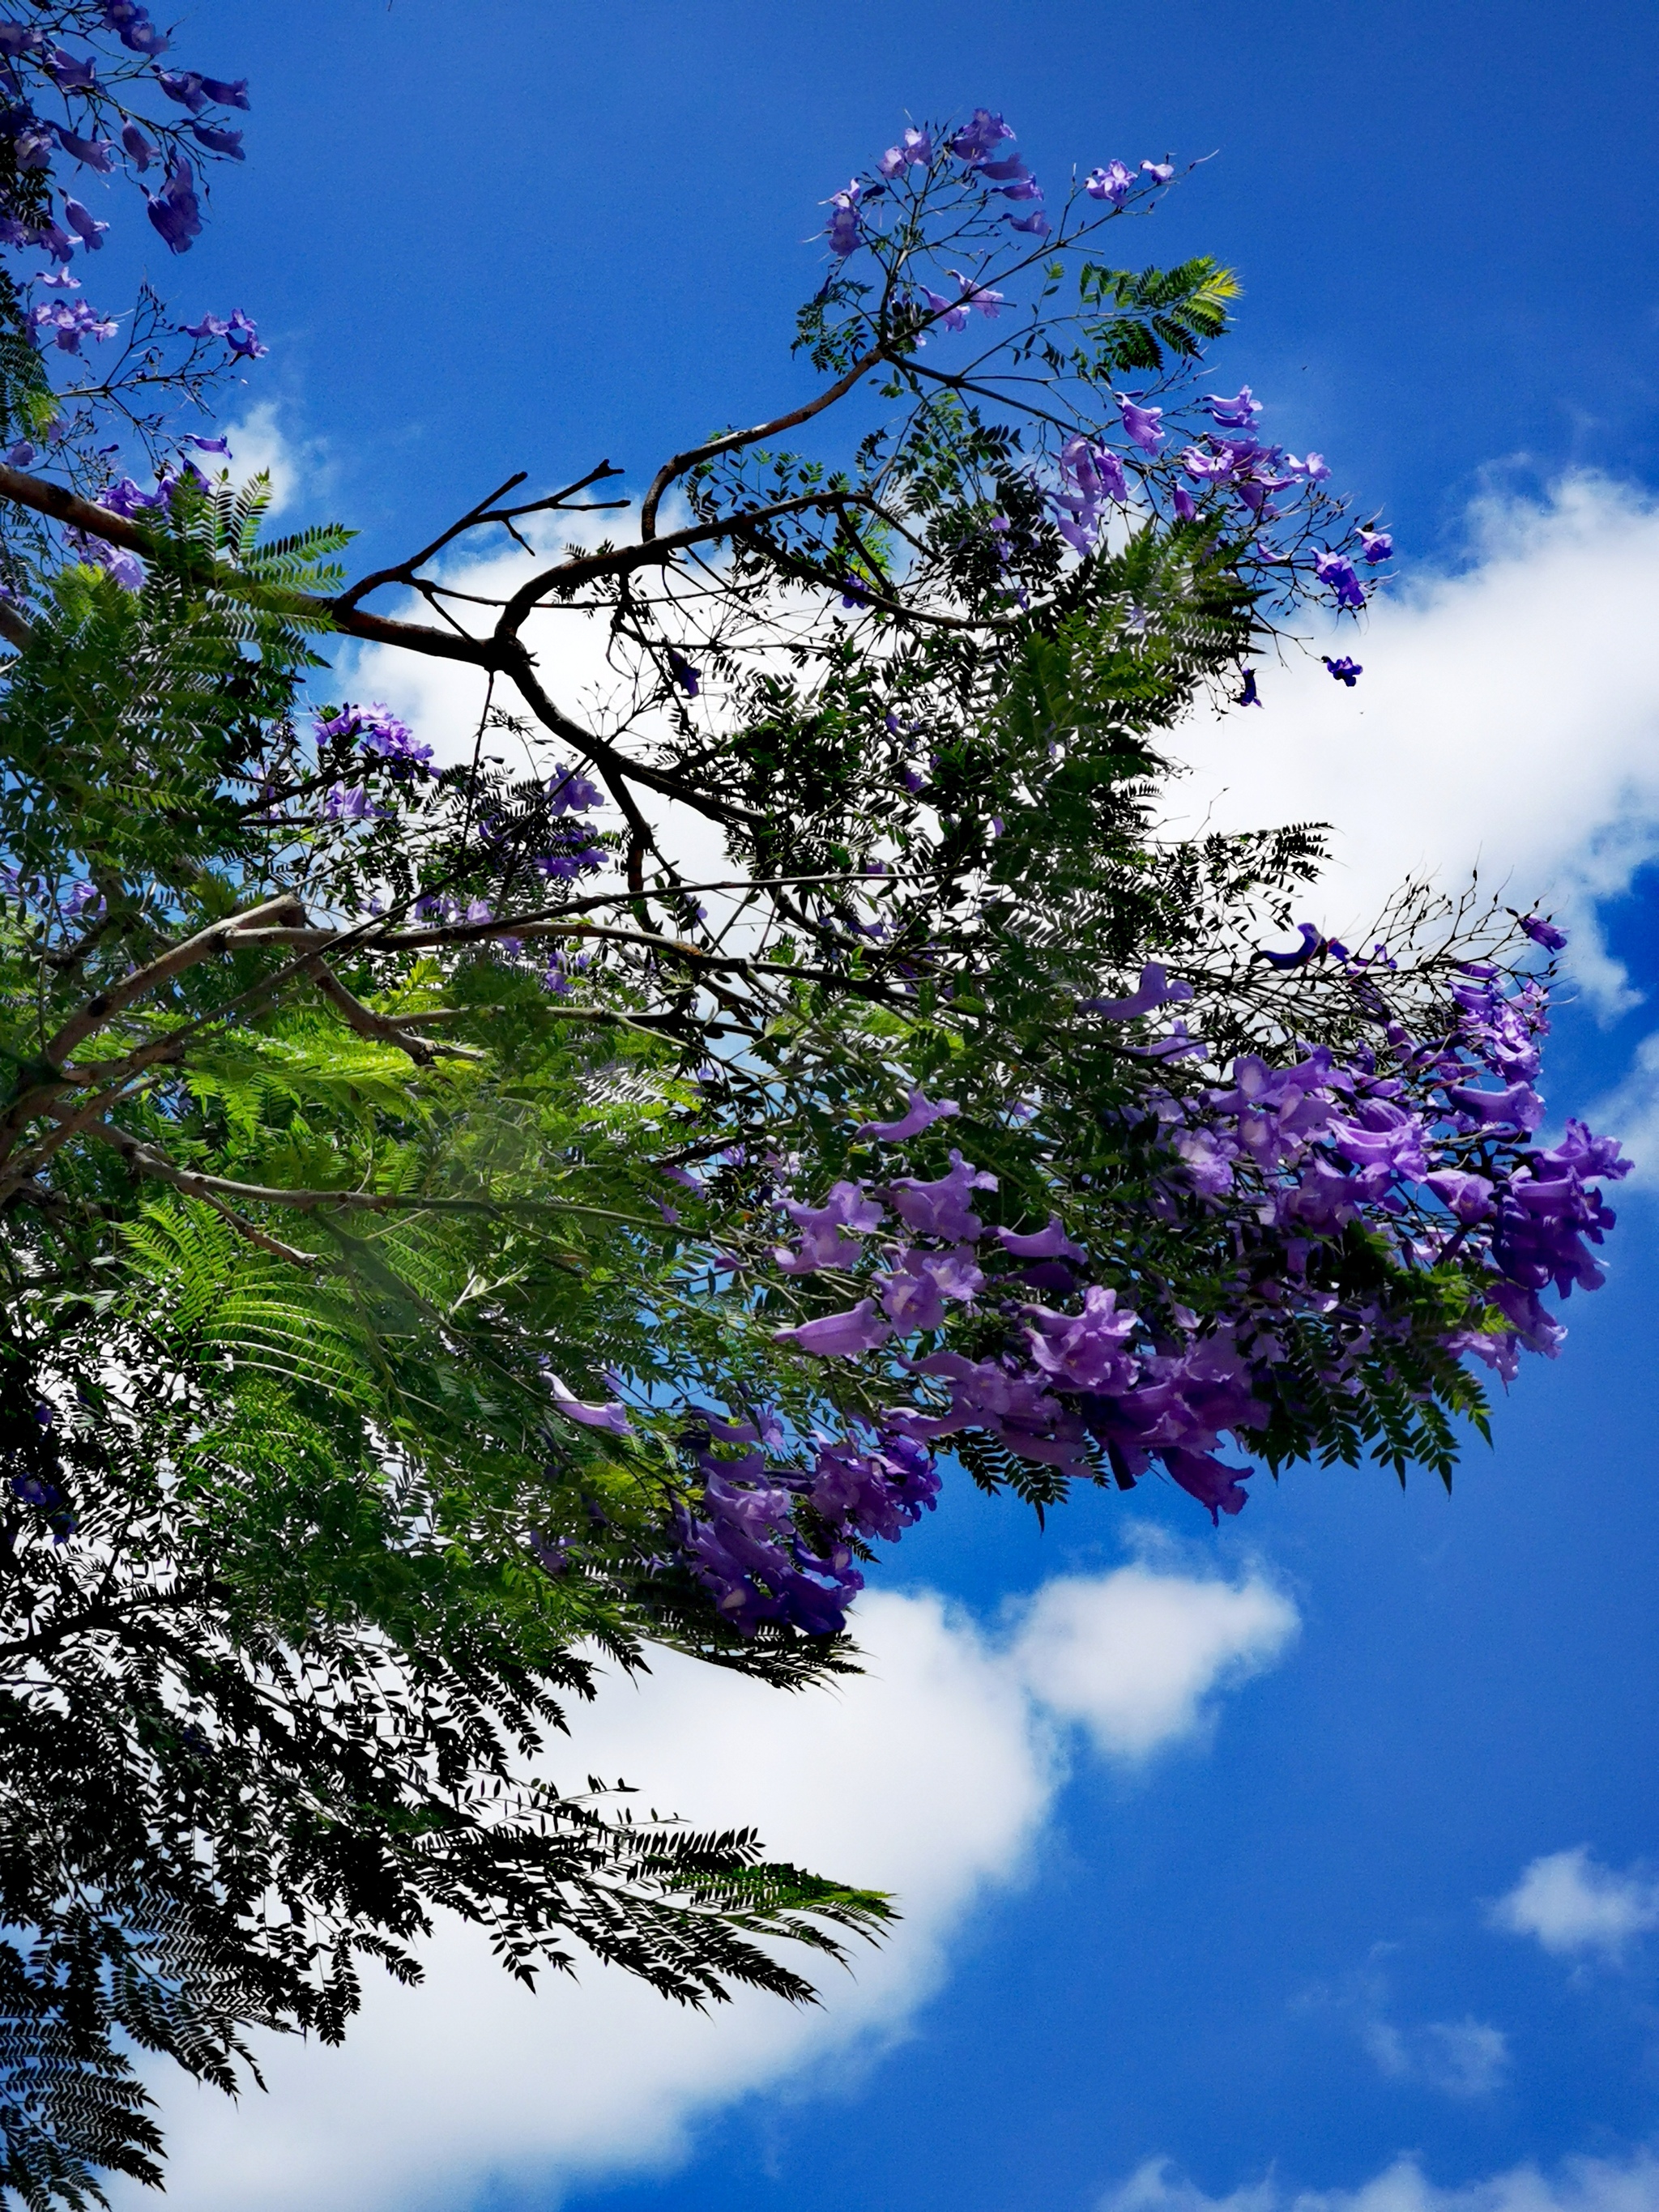 Jacaranda tree flowers - My, Flowers, Landscape, JACARANDA, The photo, Lilac flowers, Longpost